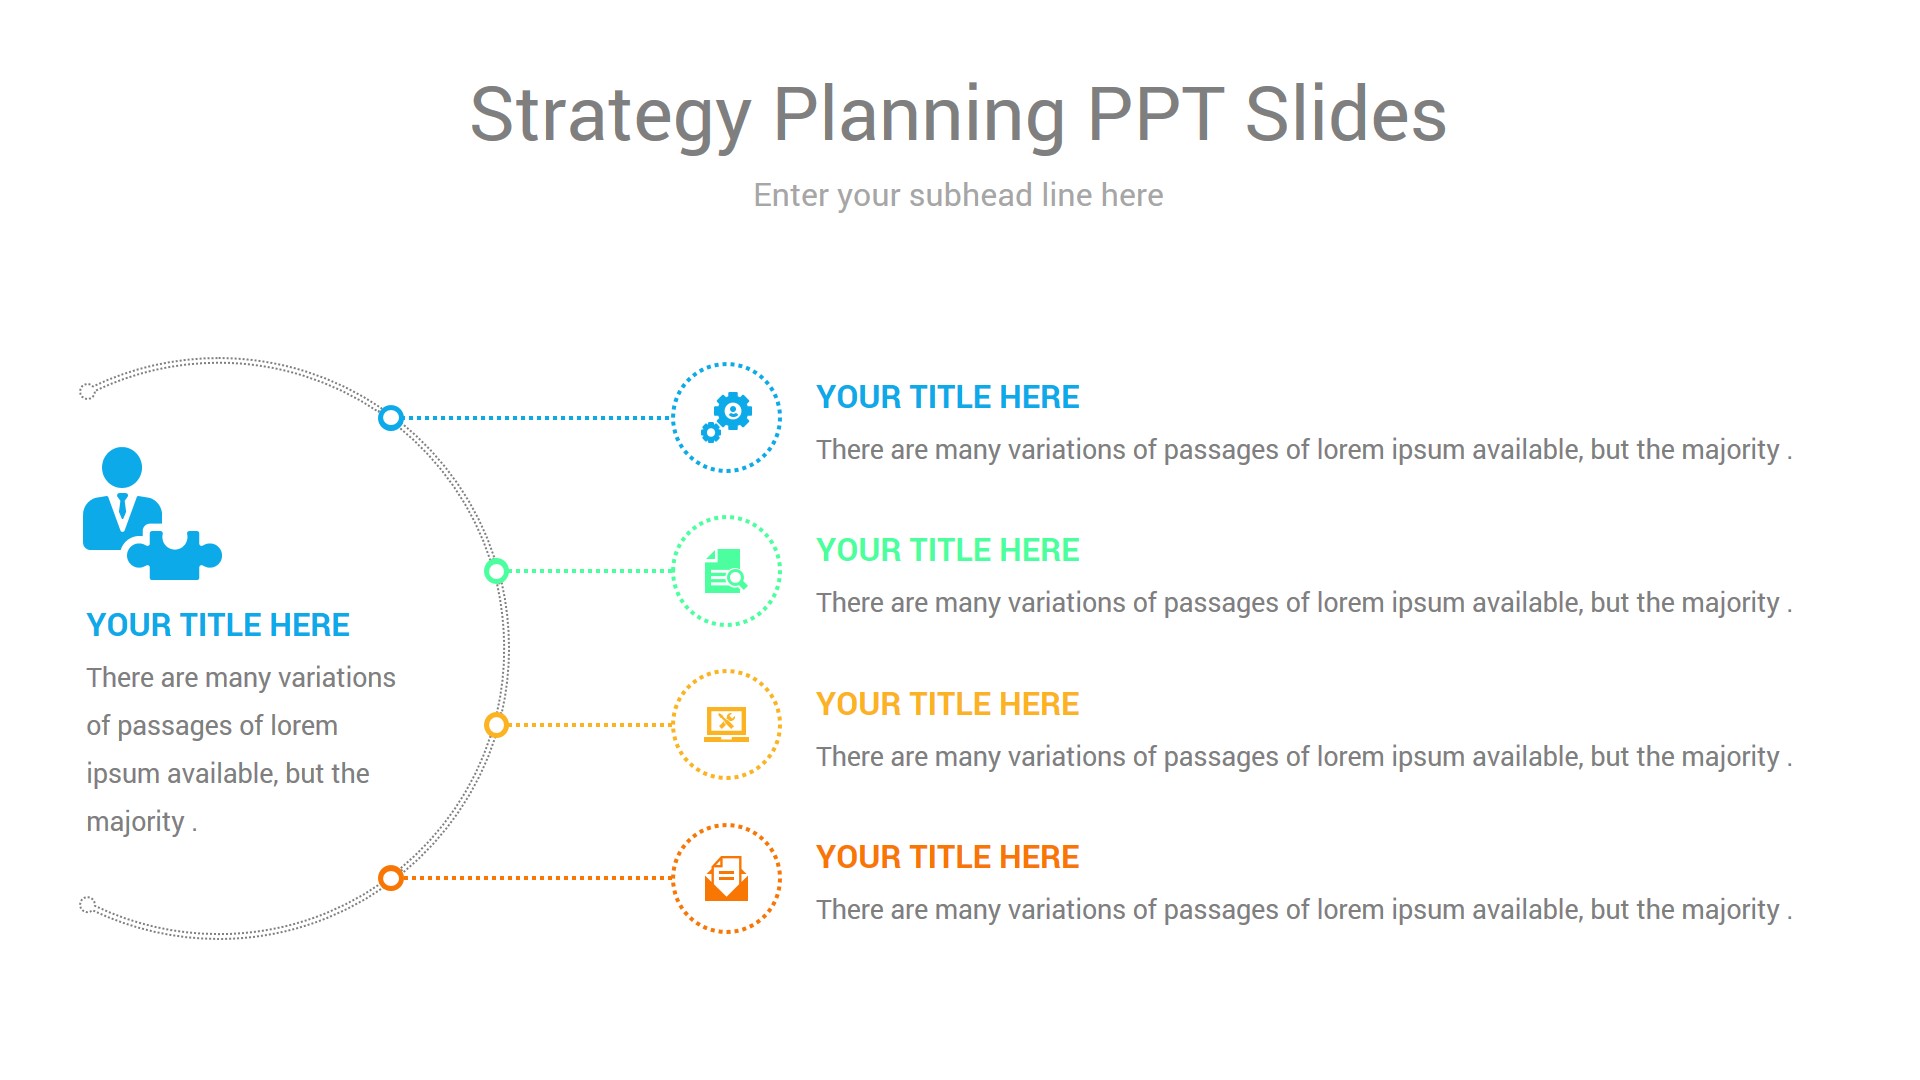 Strategy planning ppt slides